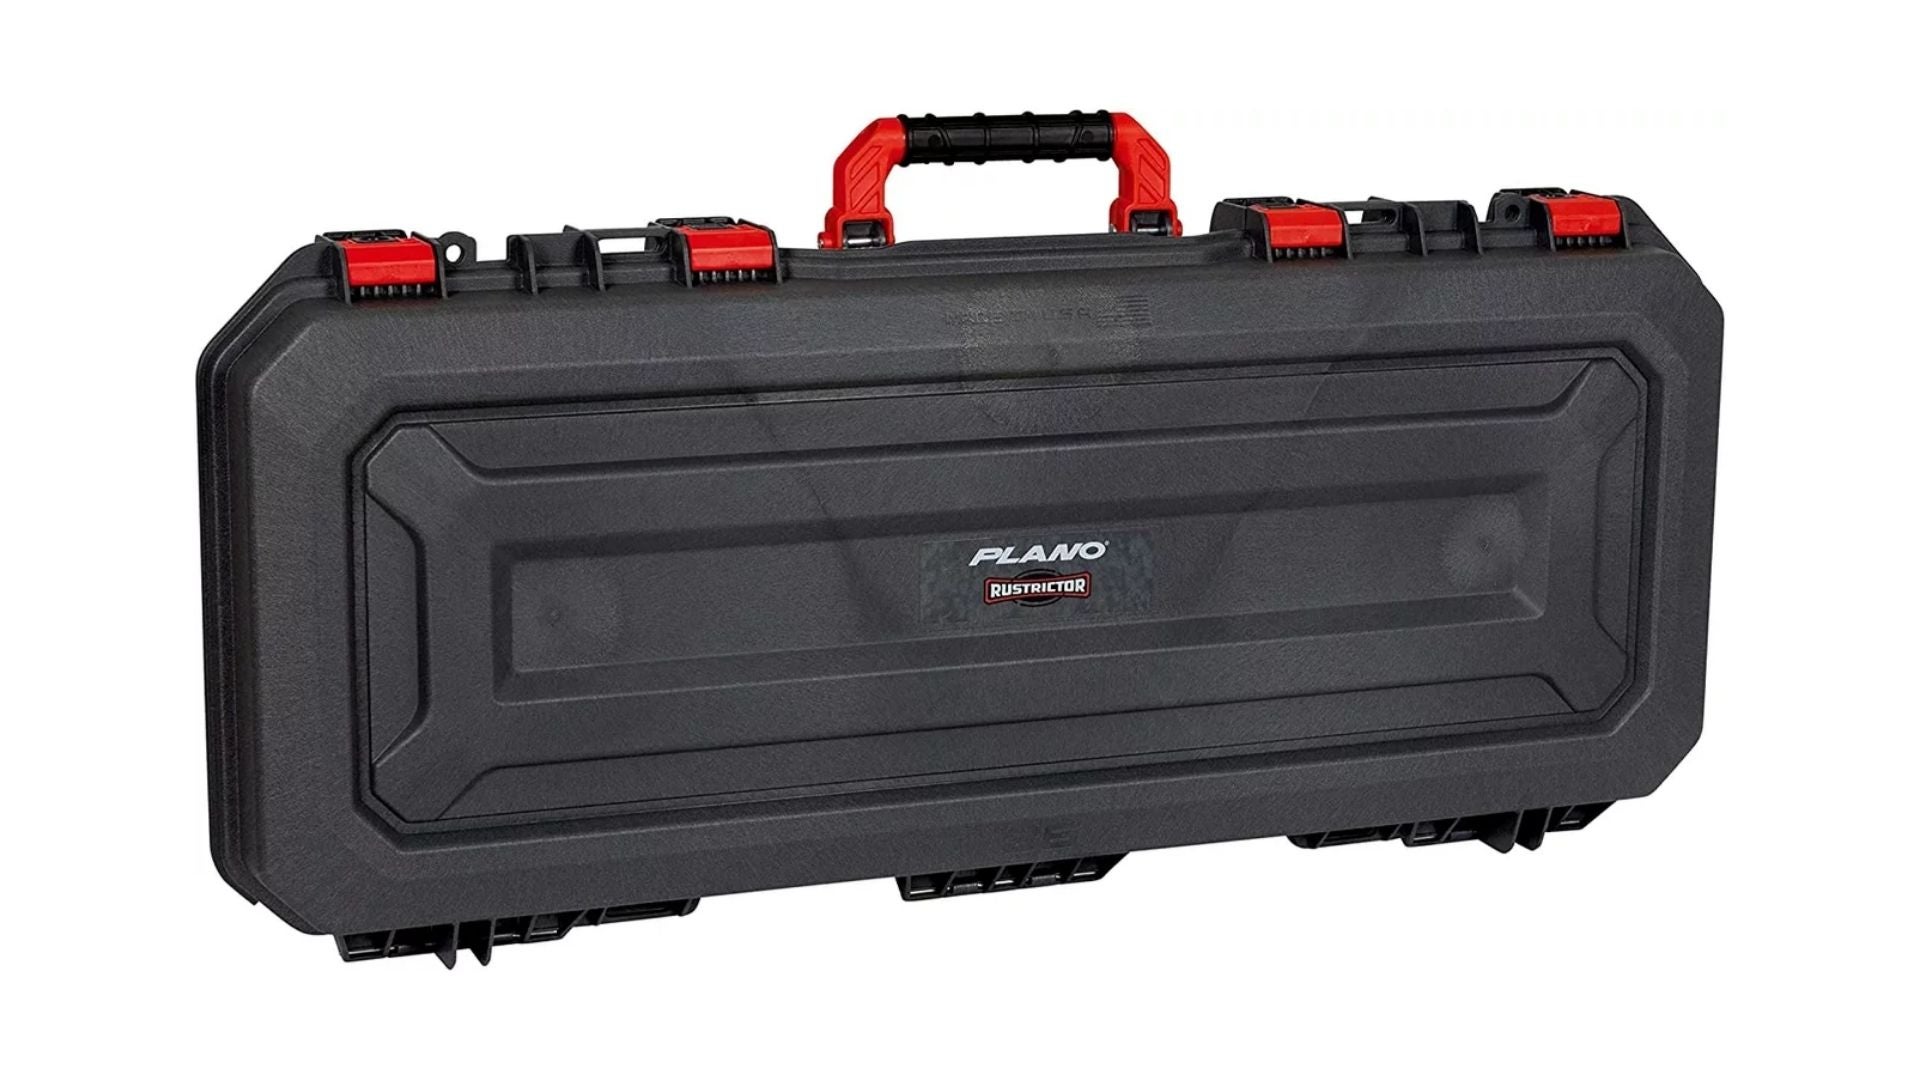 Arms Gun Case Hard Shell Rifle Scope Storage Safe Box High Performance Quality